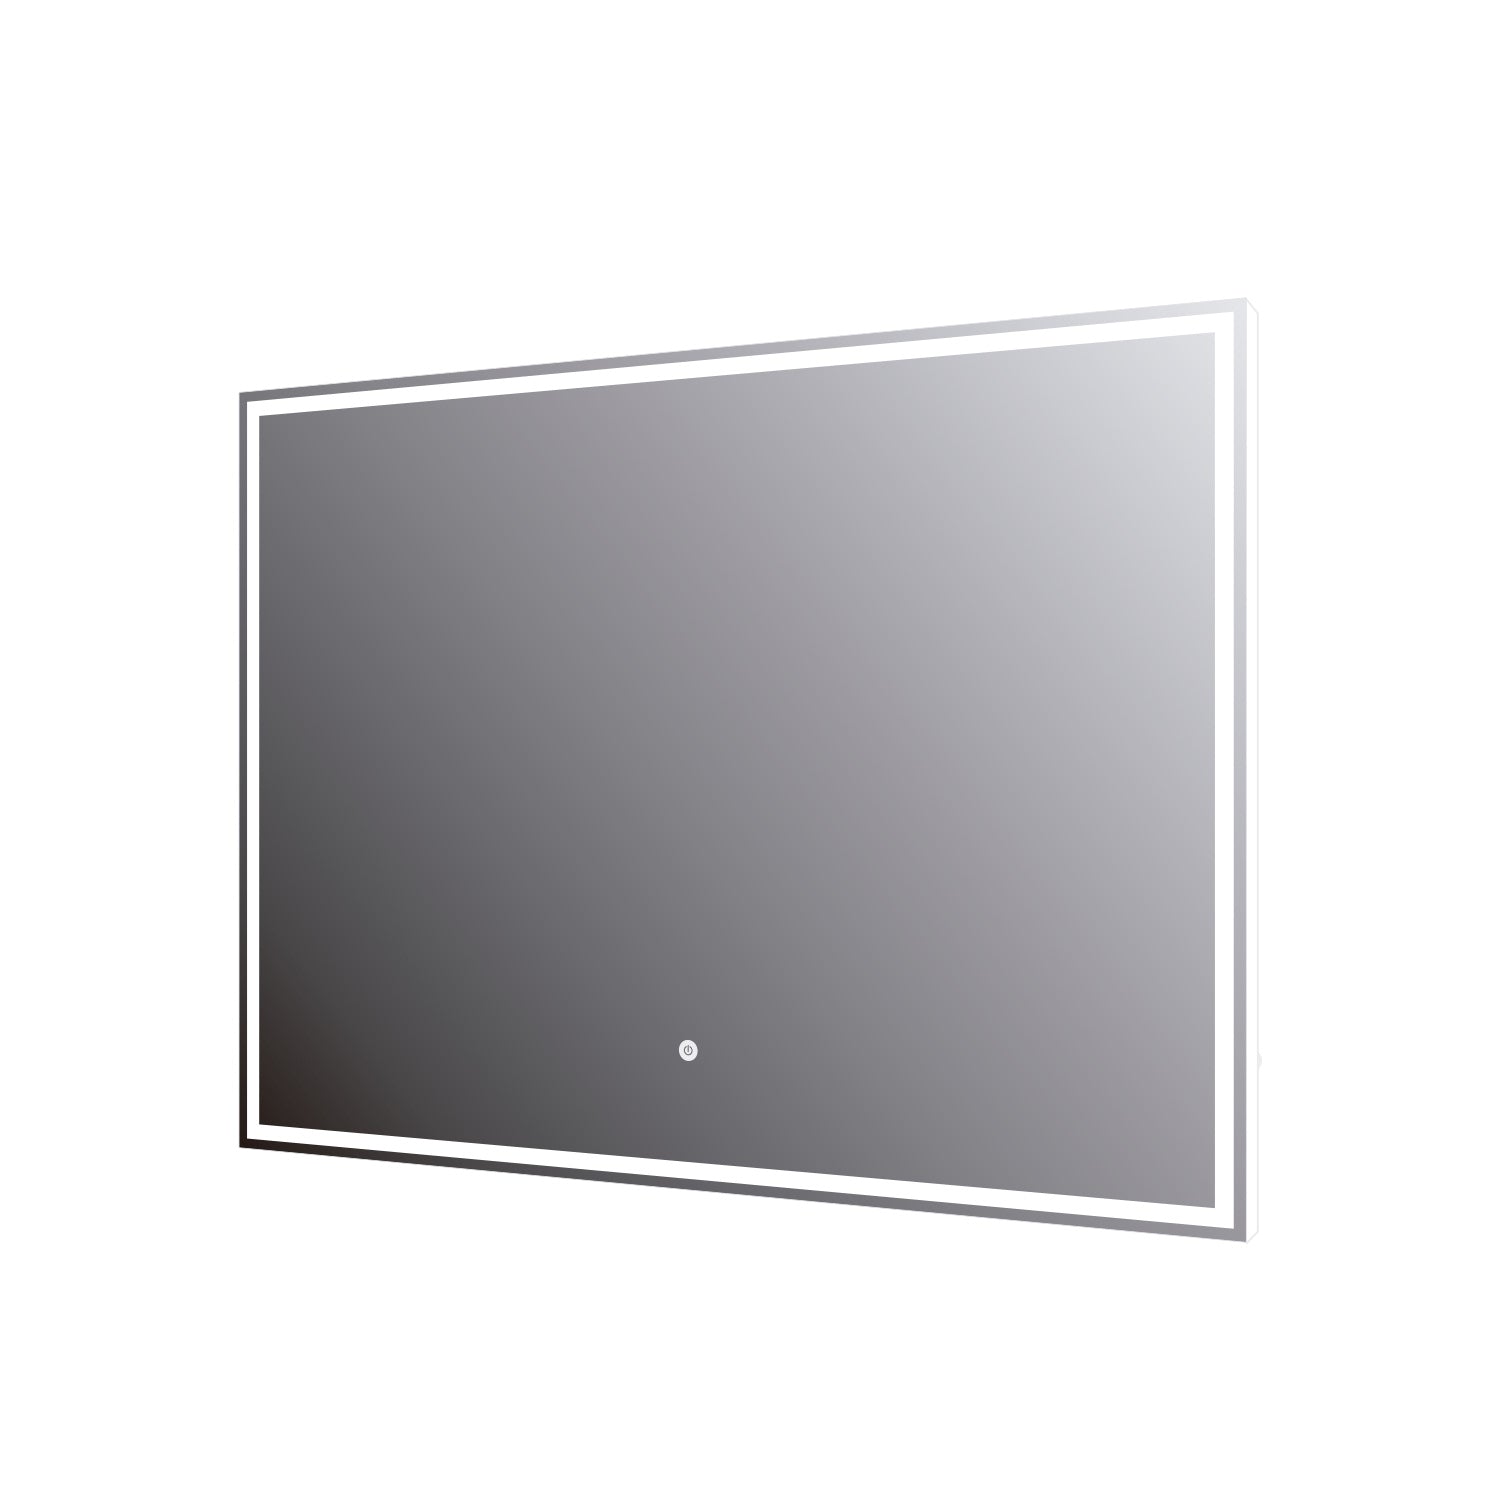 32" DAX LED Backlit Bathroom Vanity Mirror with Touch Sensor, 110 V, 50-60Hz, 31-1/2 x 23-5/8 x 12 5/8 Inches (DAX-DL758060)